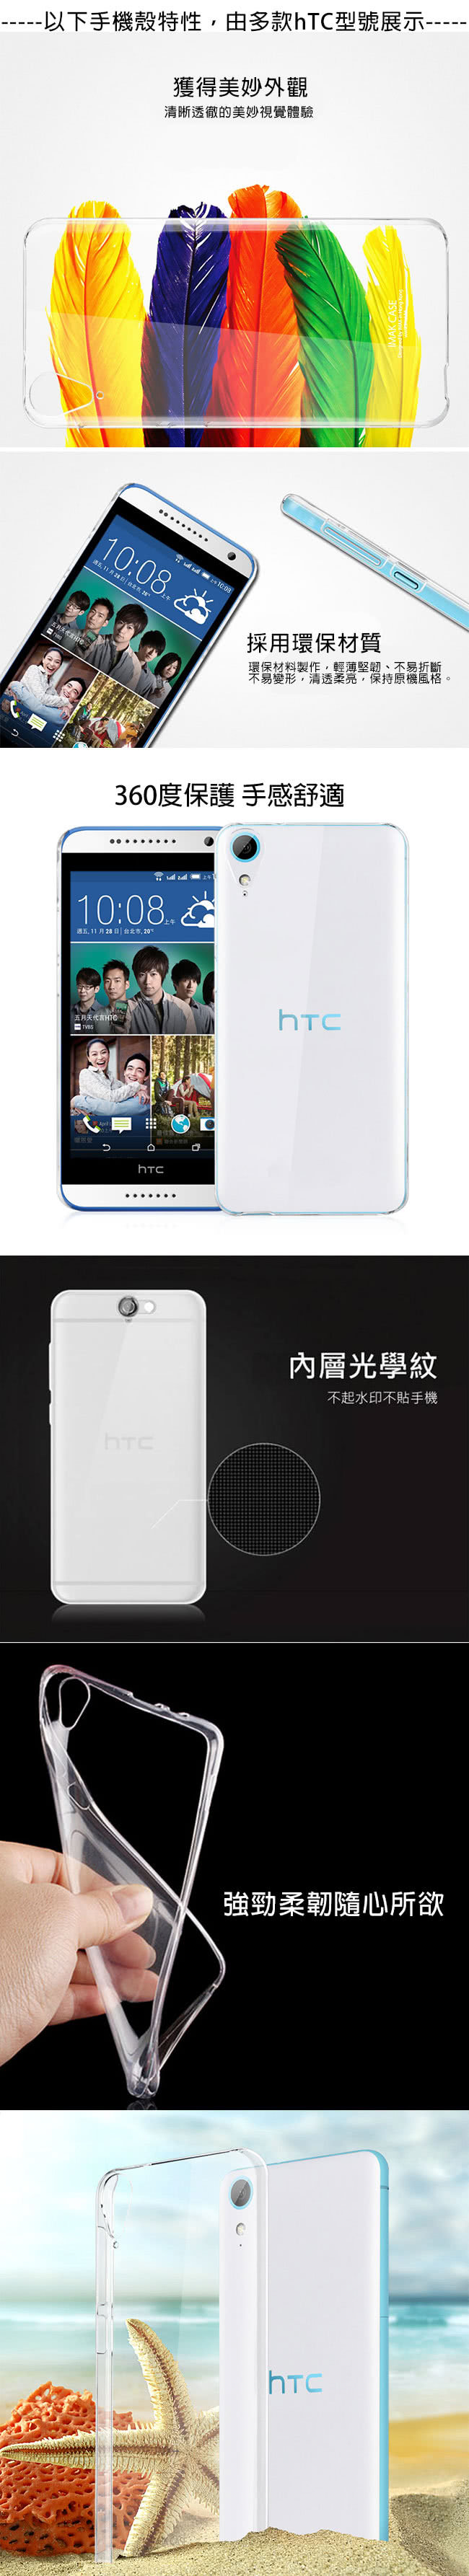 HTC-TPU_L.jpg?t=1523007181890